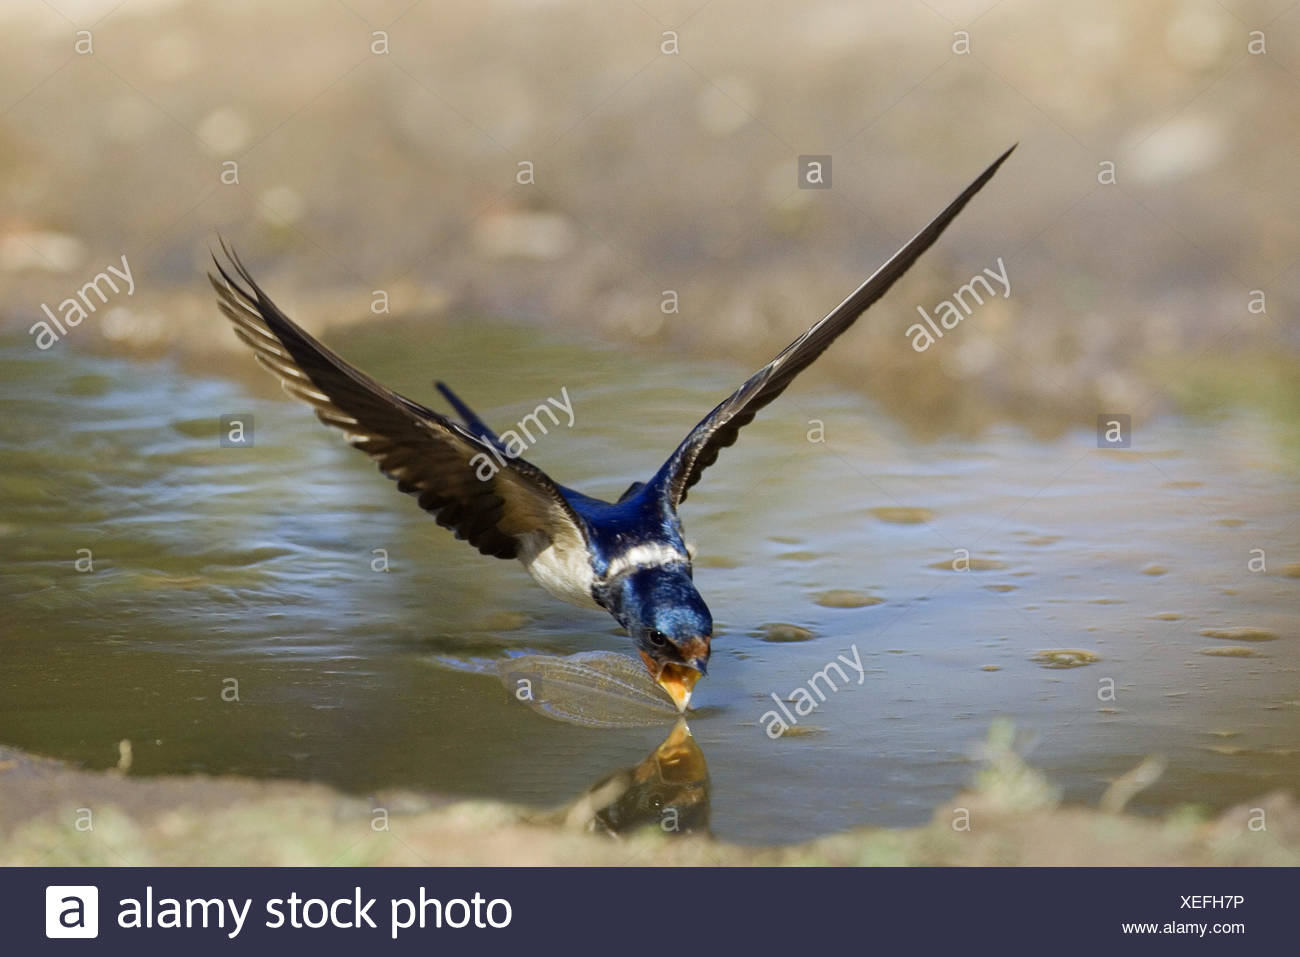 barn-swallow-hirundo-rustica-swallow-drinking-in-flight-from-a-lake-germany-XEFH7P.jpg